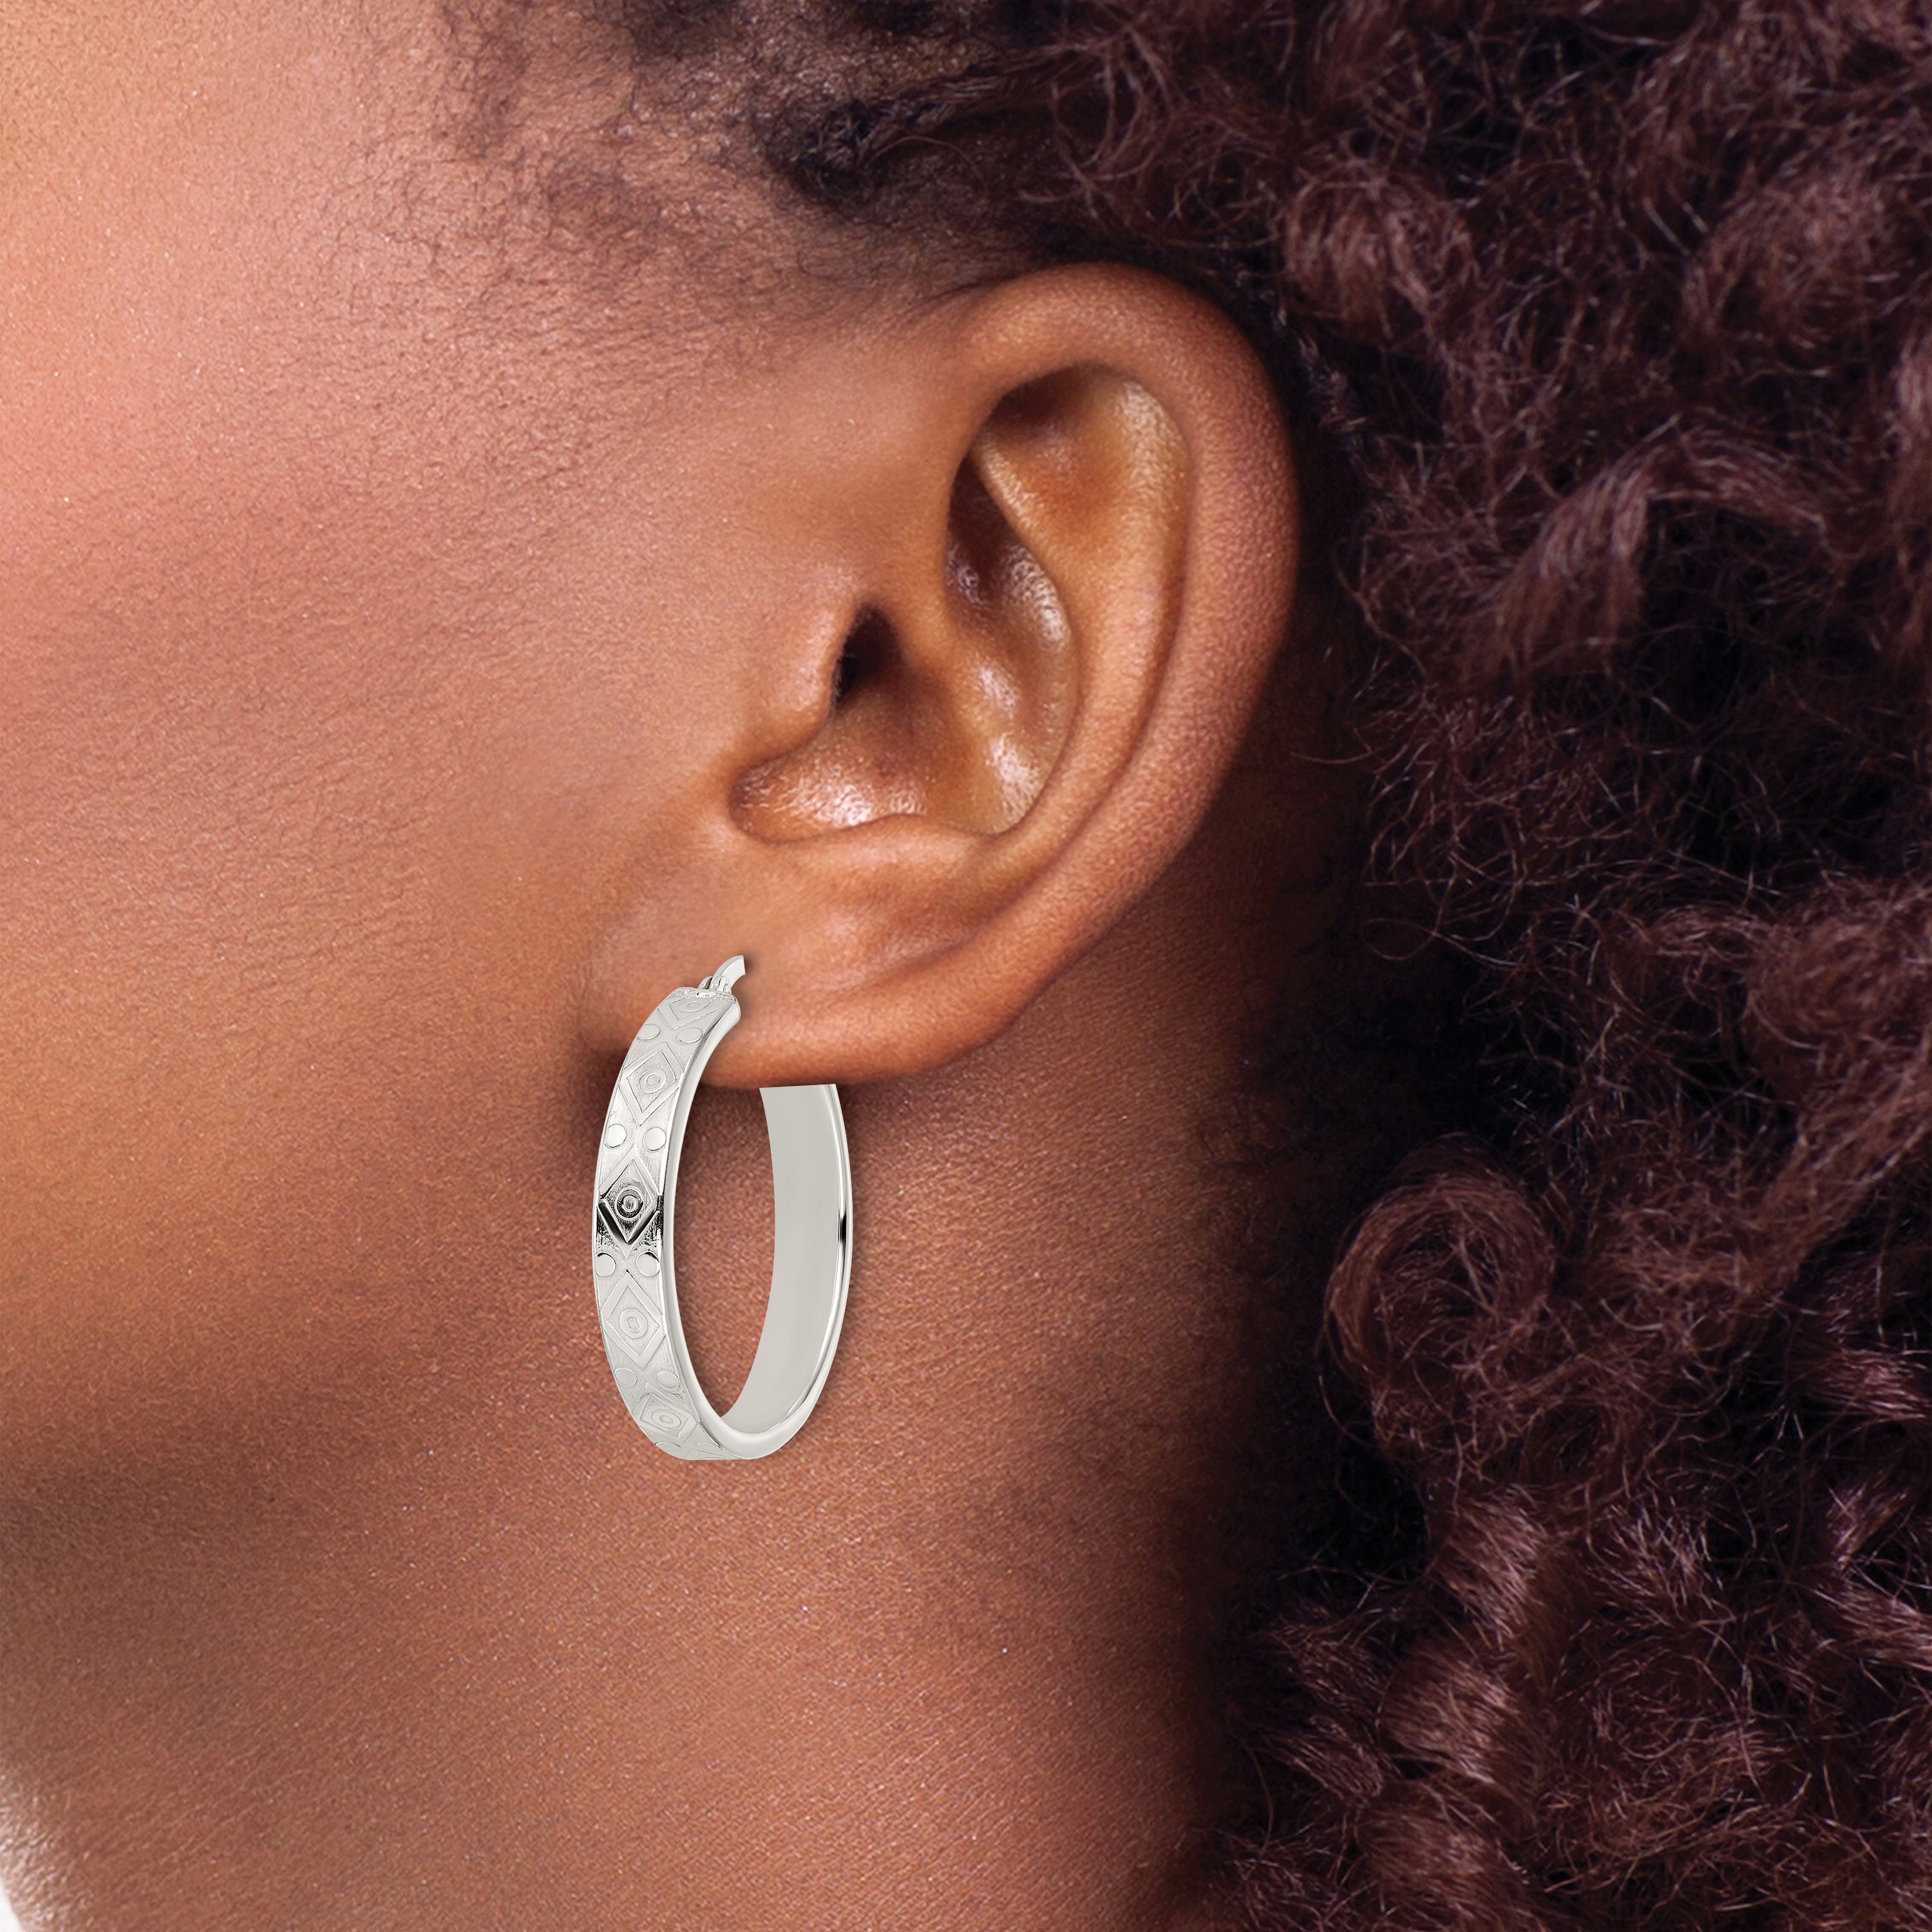 Sterling Silver Polished Geometric Design 5.25mm Round Hoop Earrings